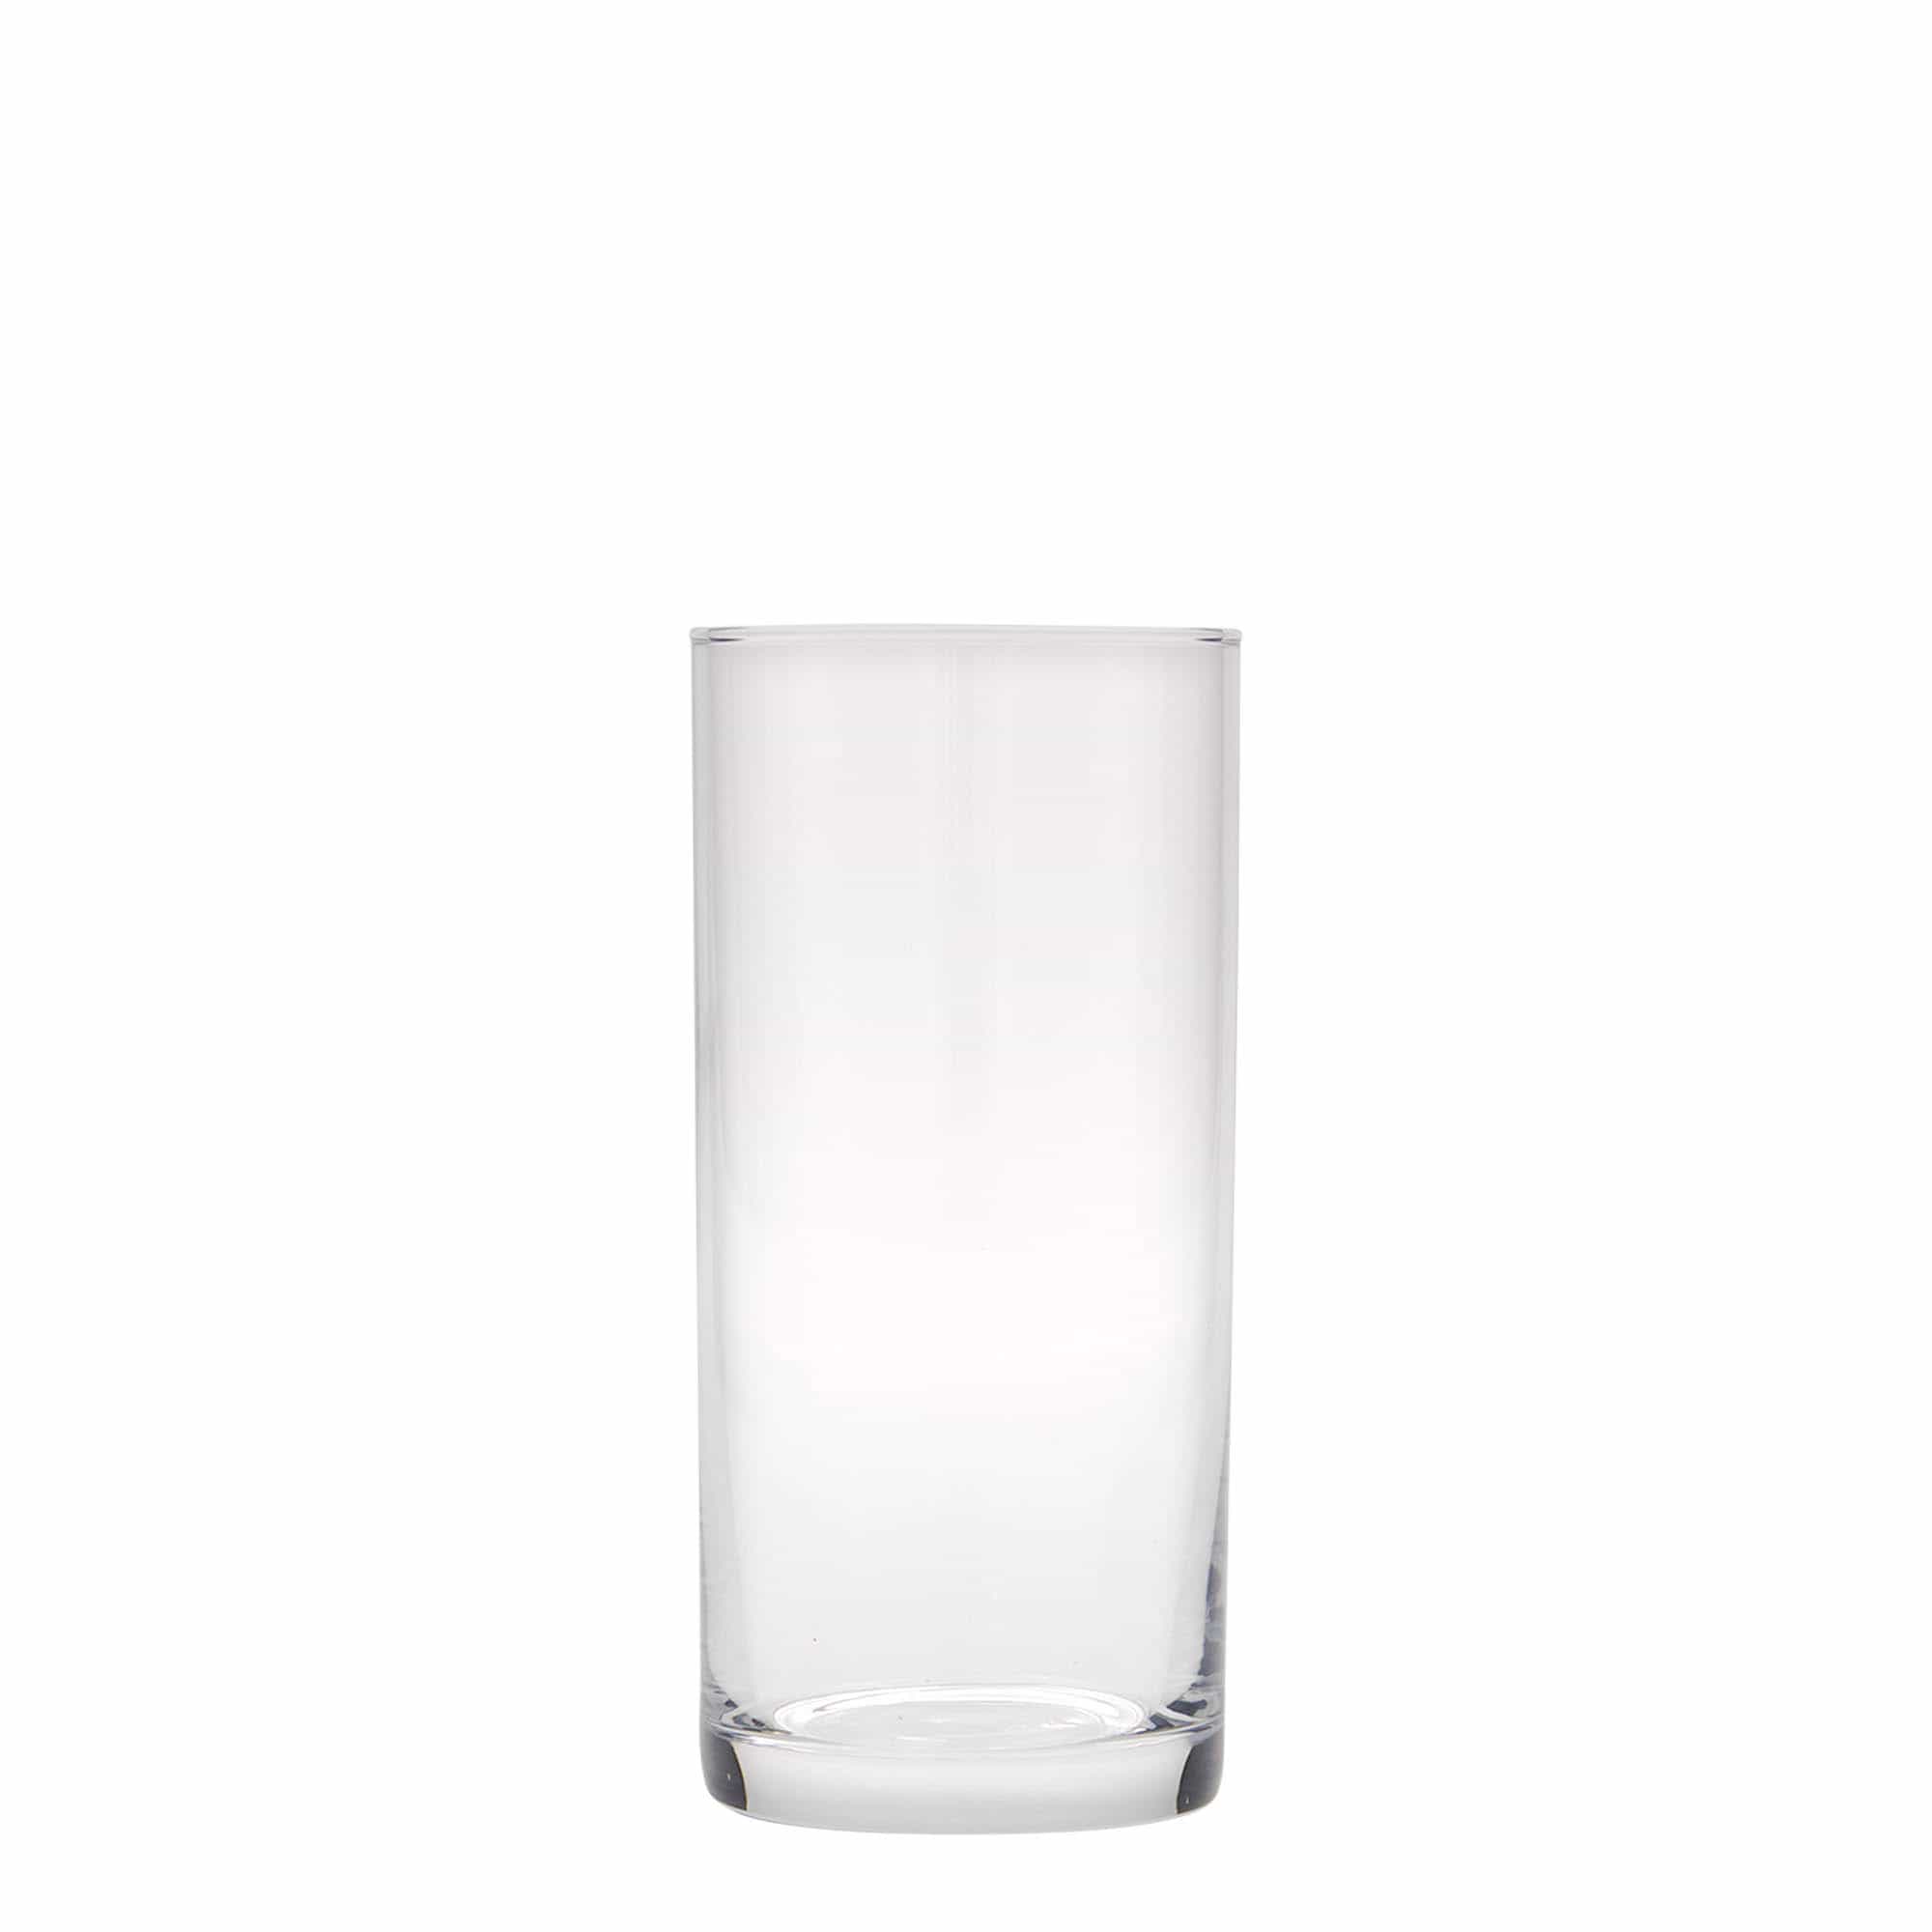 200 ml drinking glass 'Altbier', glass